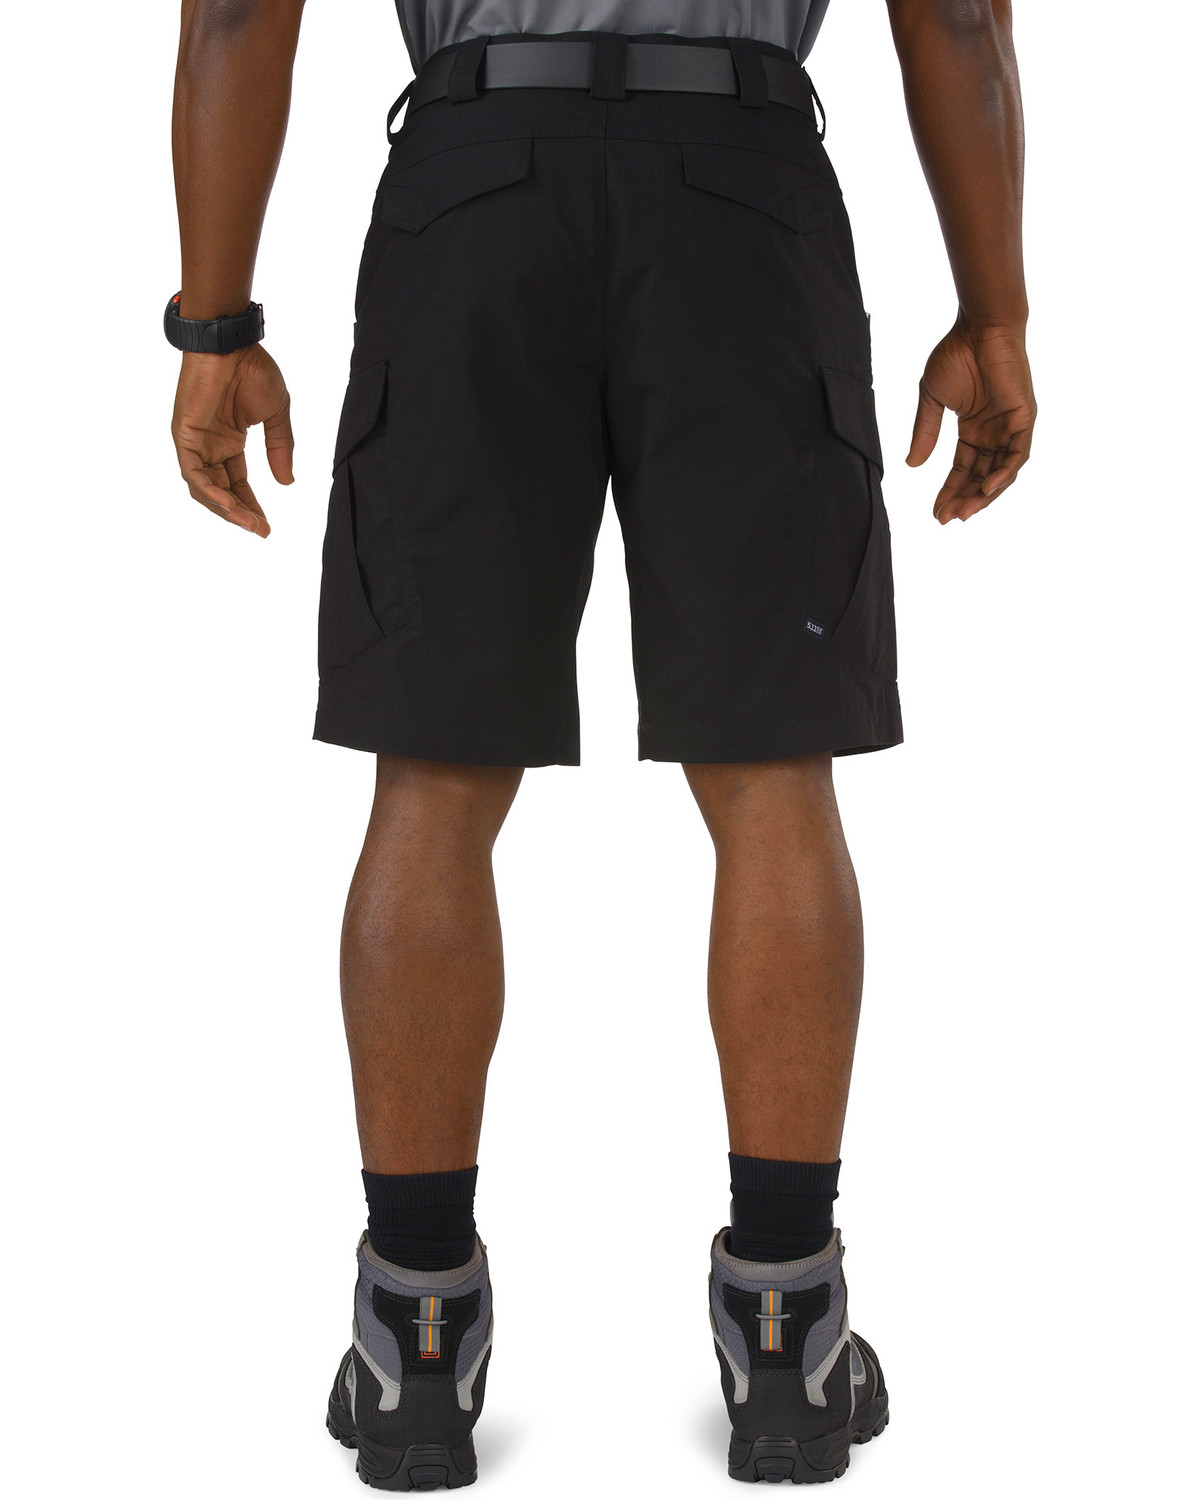 5.11 Tactical Men's Stryke Shorts